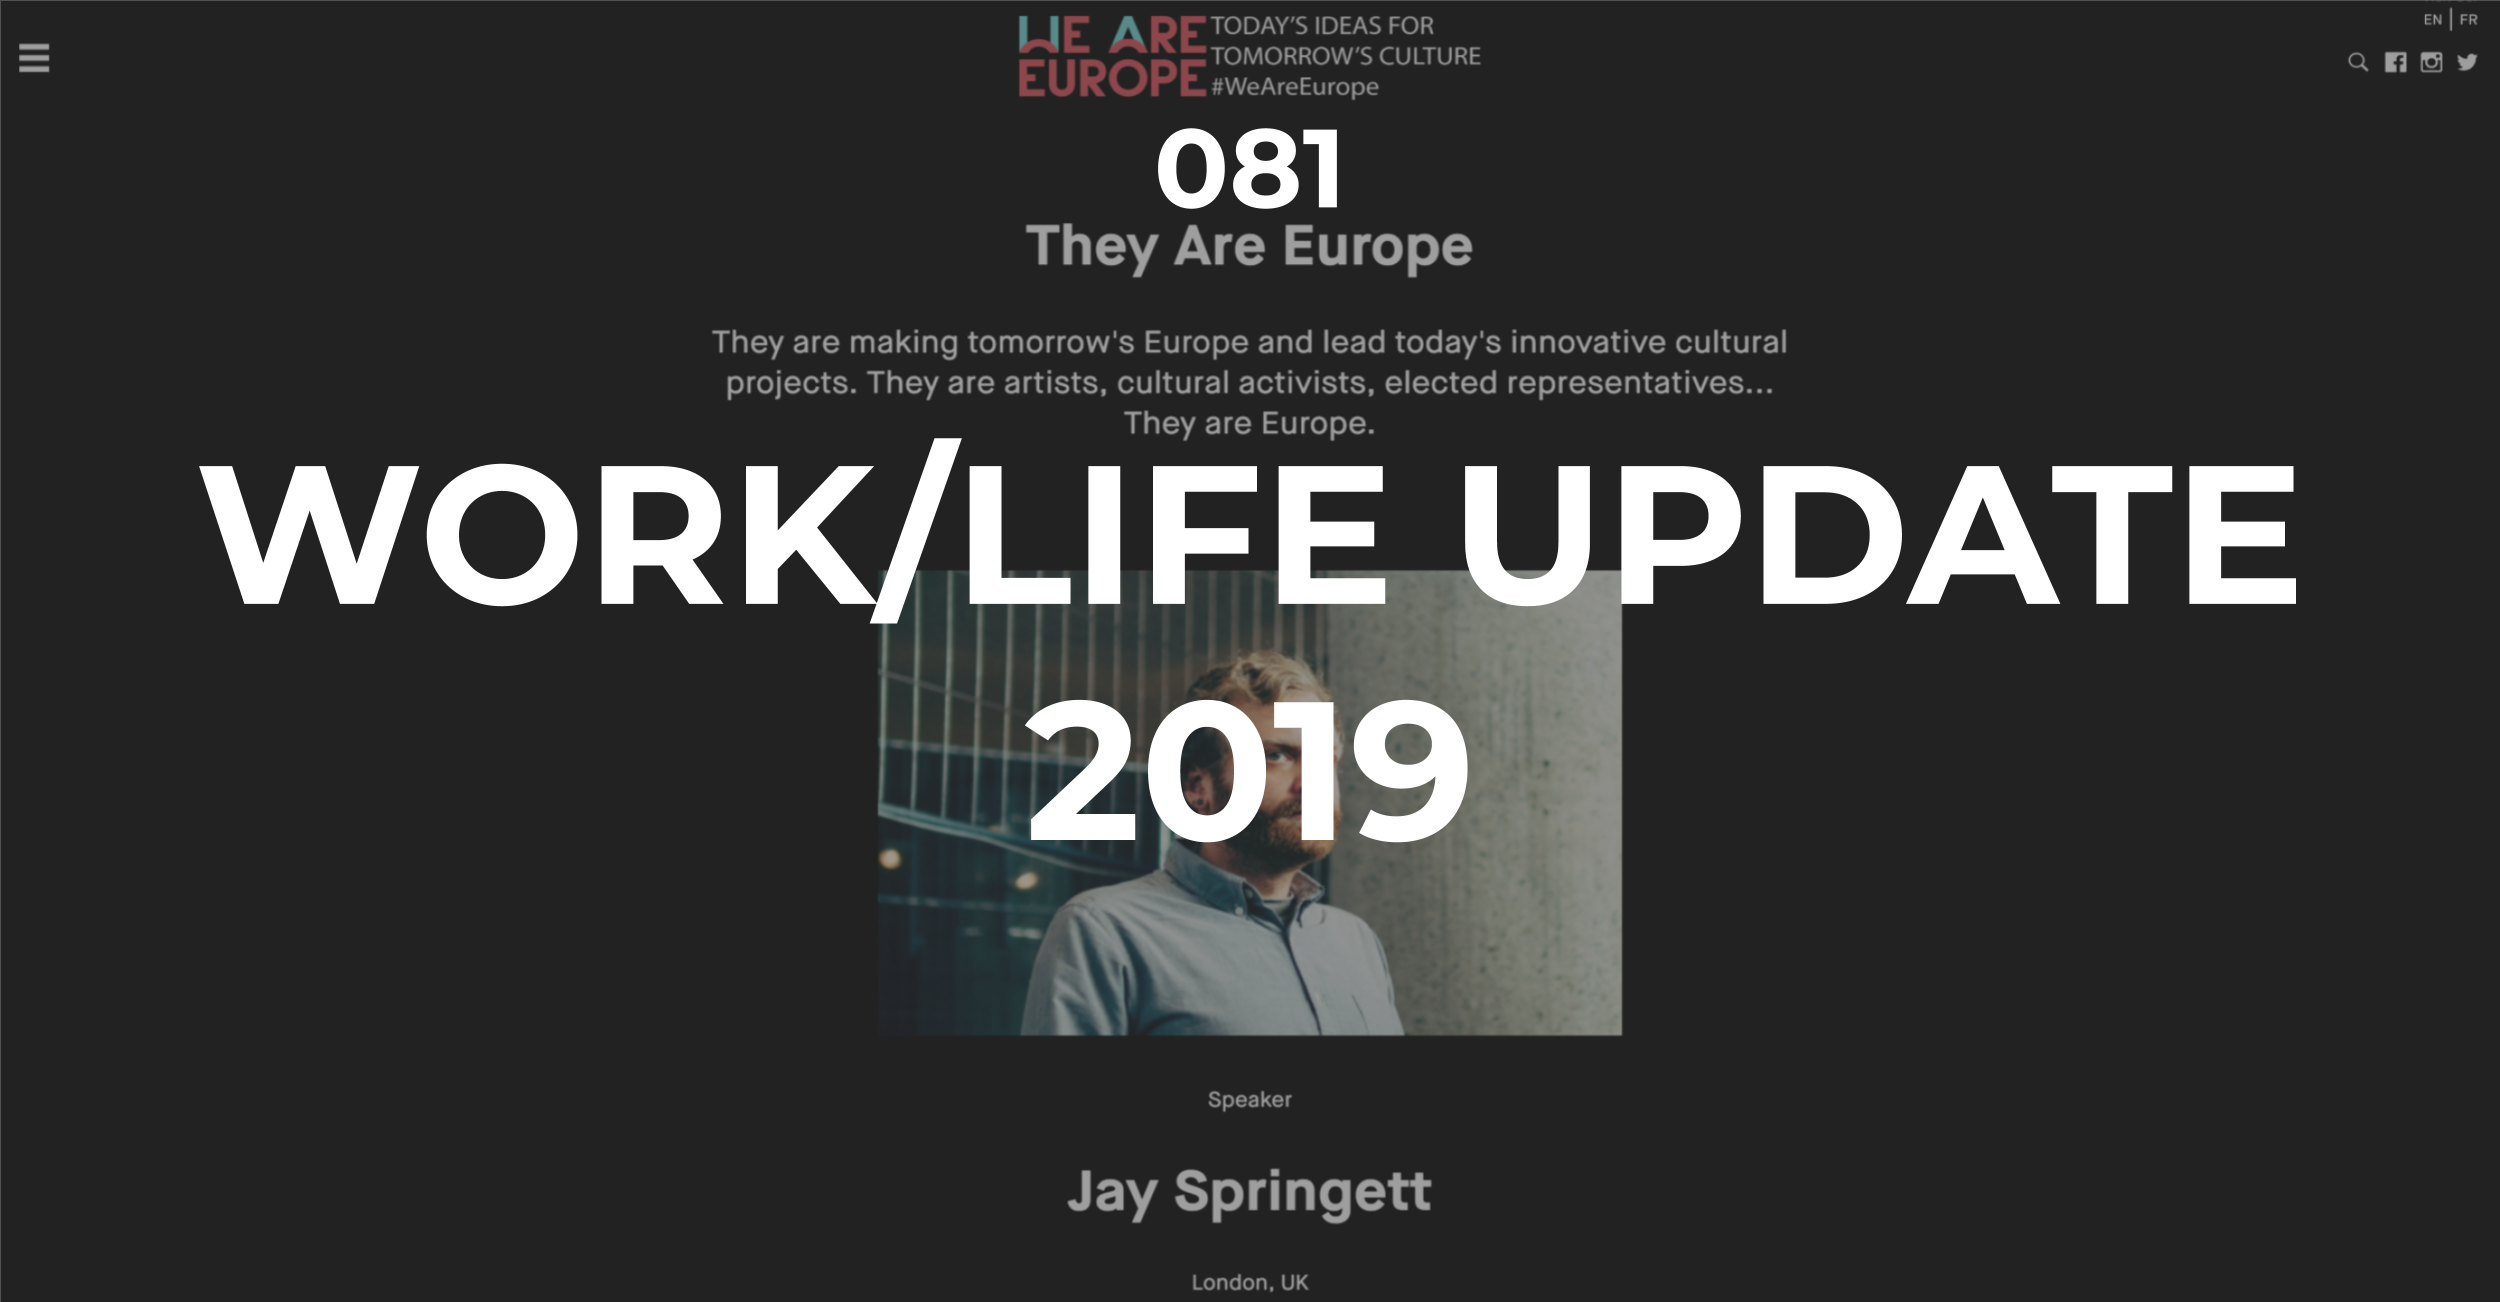 Work/Life Update 2019